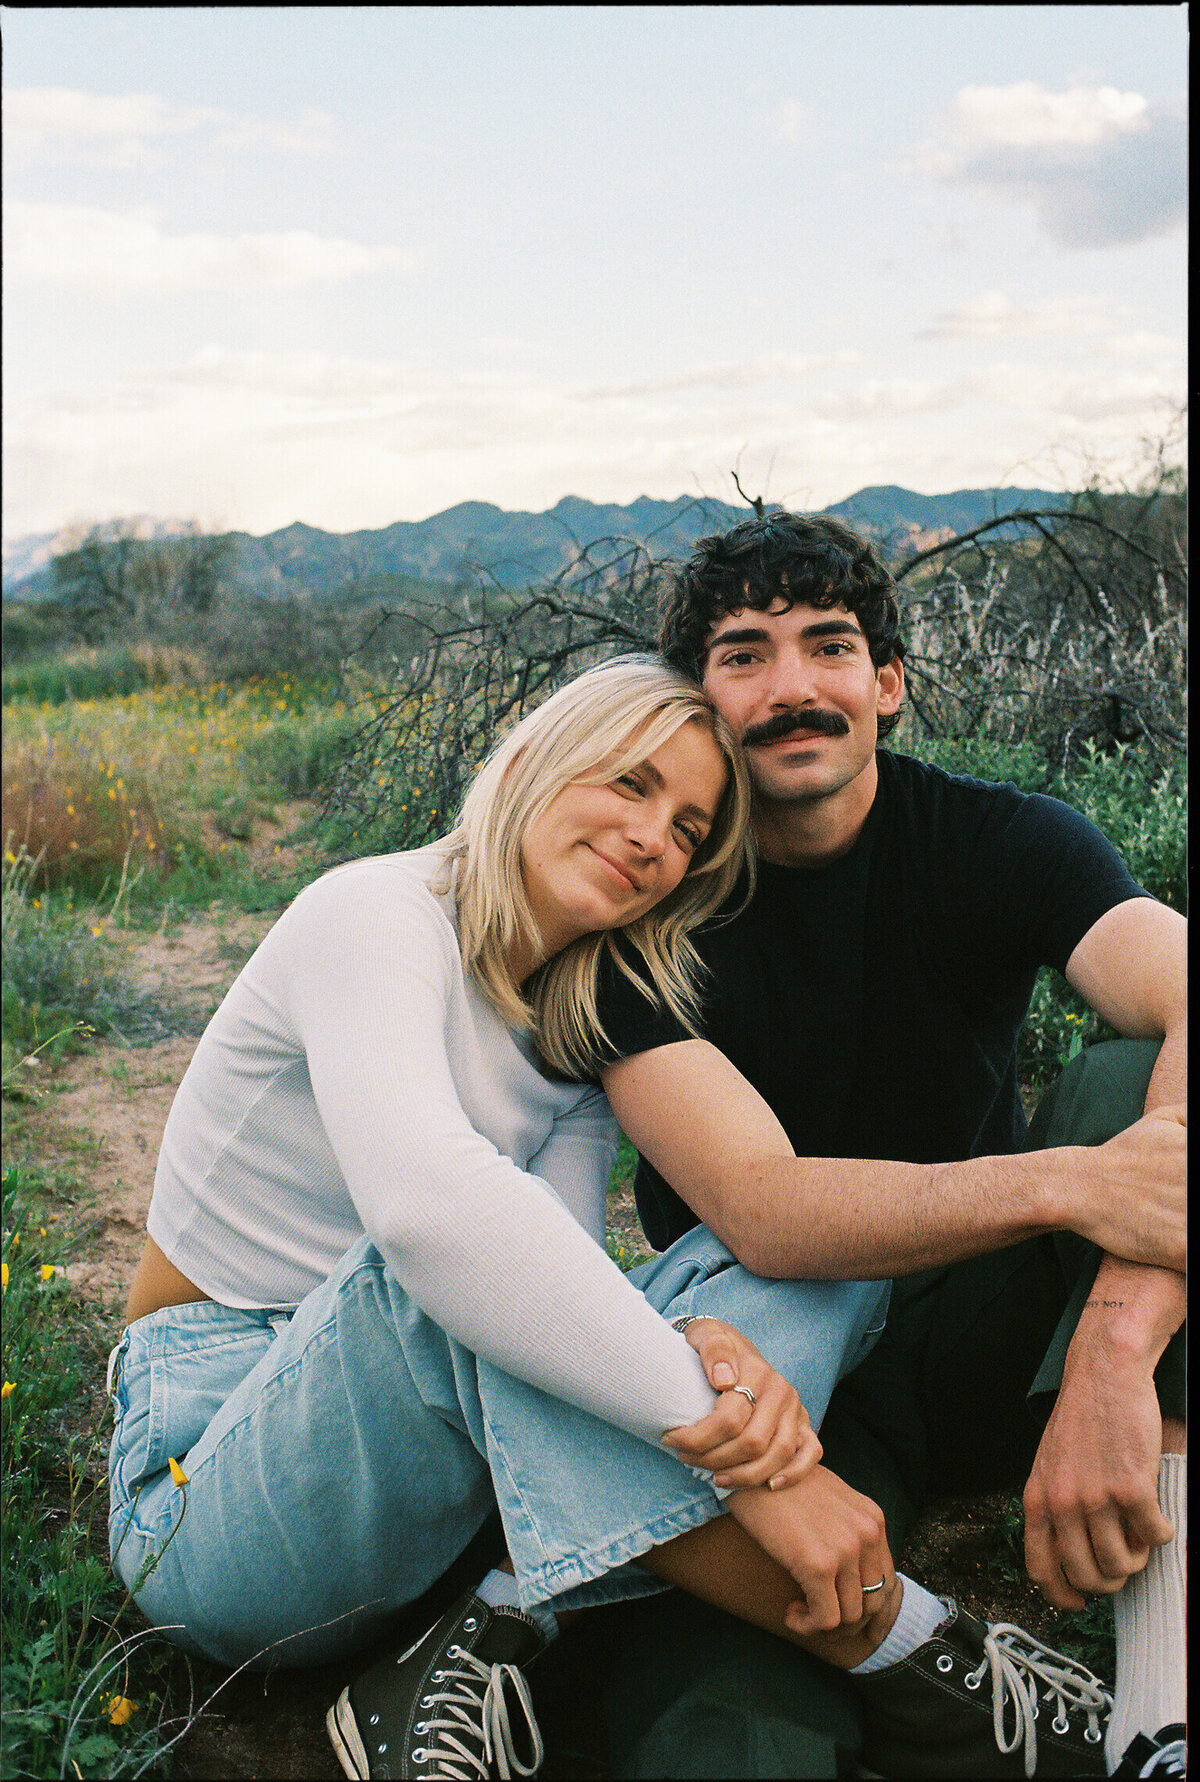 Border-Mesa-Arizona-Couples-Session-Film-Photographer-17 copy